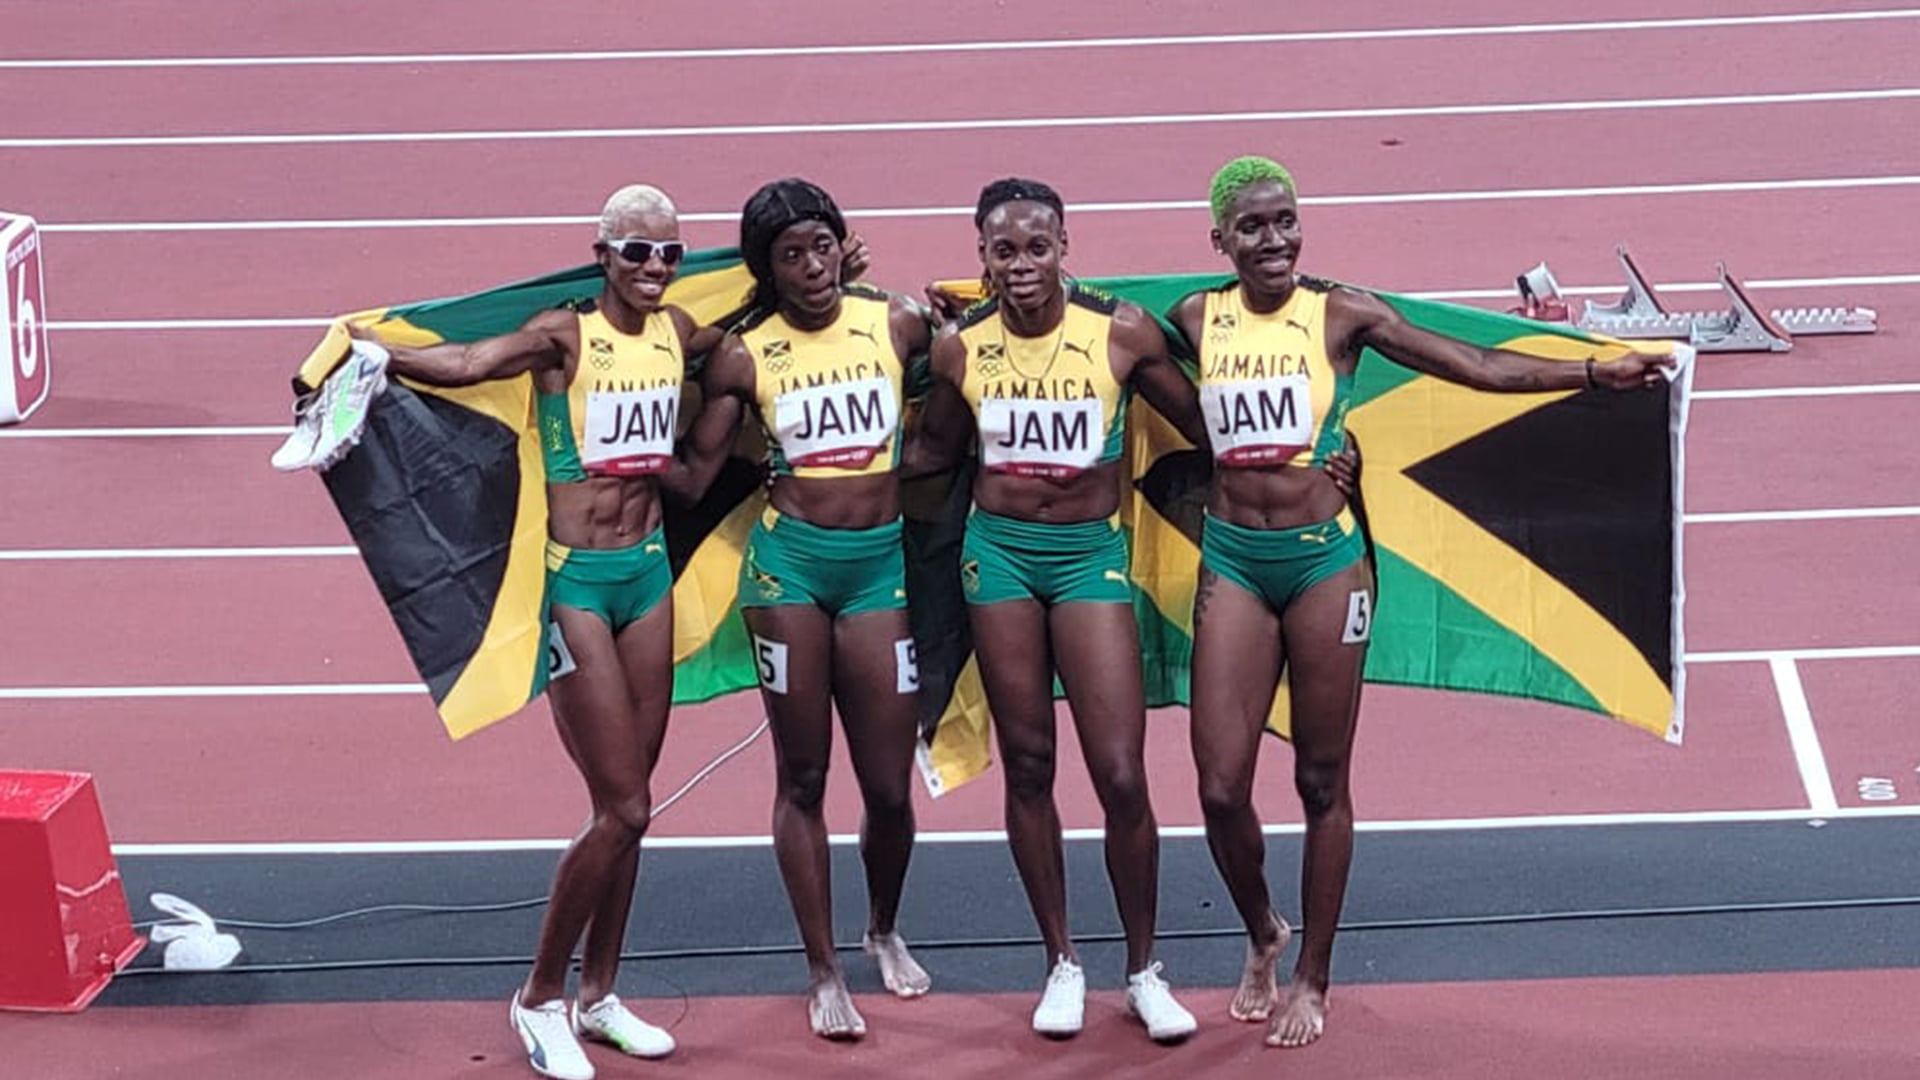 Jamaica Bags 9 Medals @ Tokyo Olympics